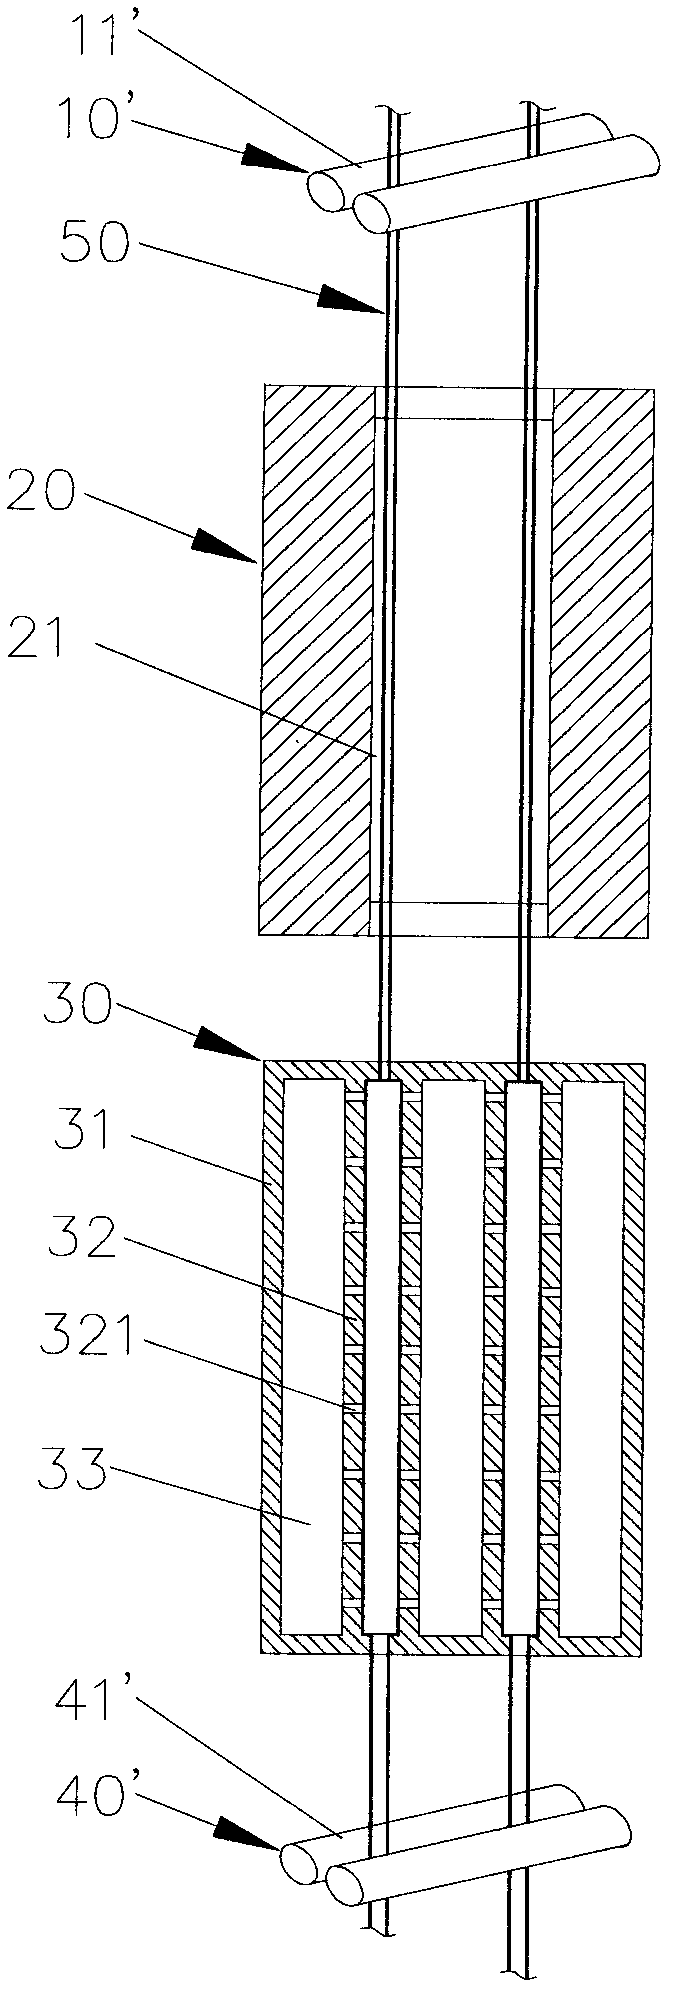 Method for heating shrinkable tubes and shrinkable tube expanding system using same